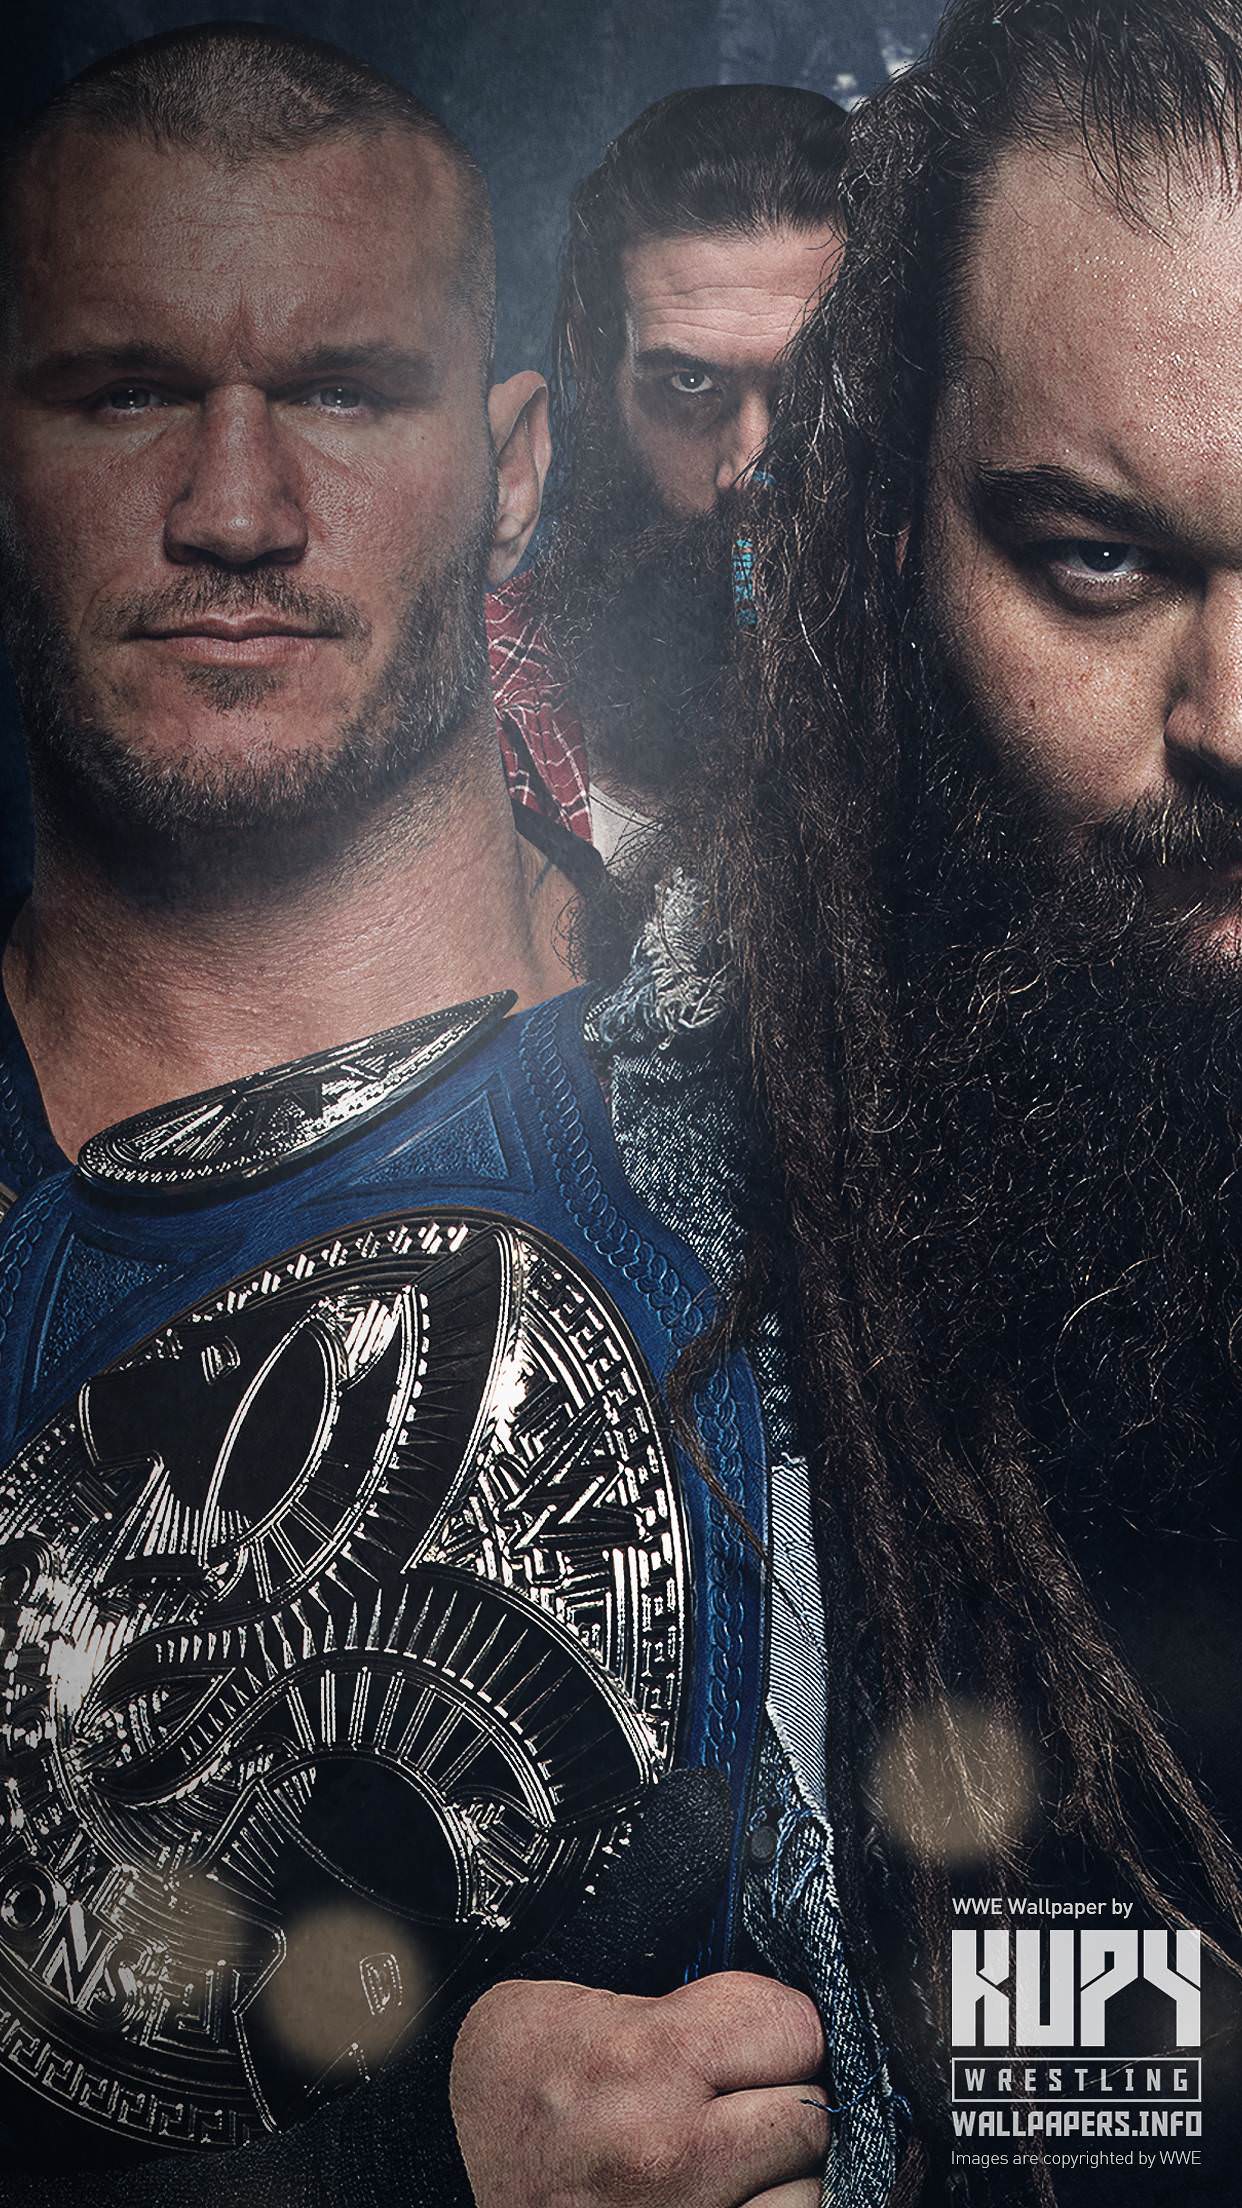 NEW The Wyatt Family (w/ Randy Orton) SmackDown Tag Team Champions